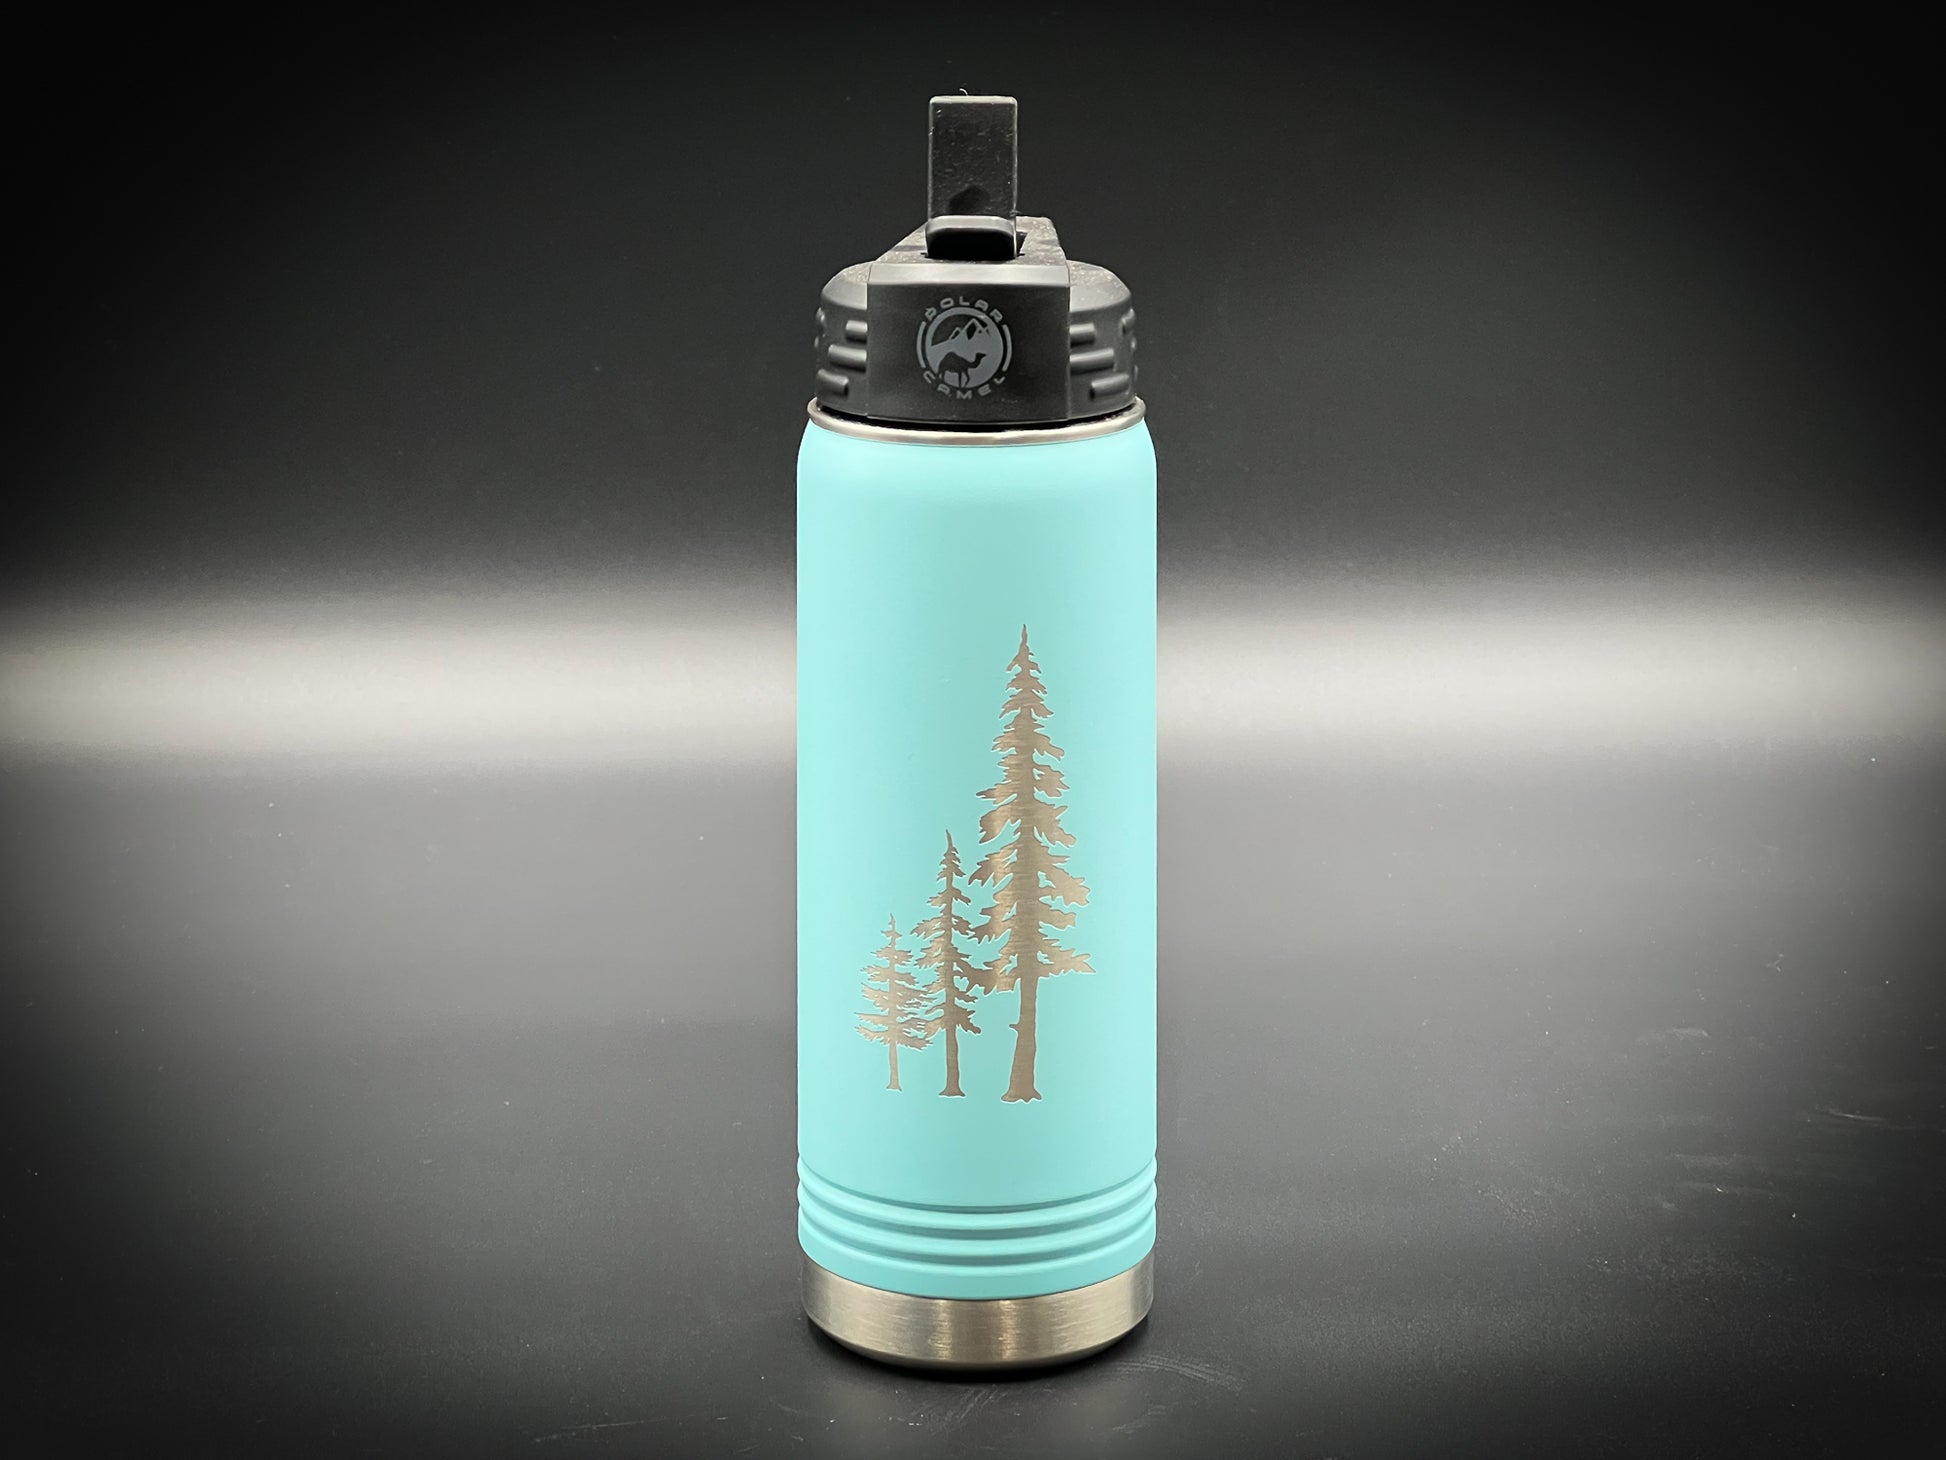 Make My Lake 20 oz insulated water bottle – Adirondack Etching